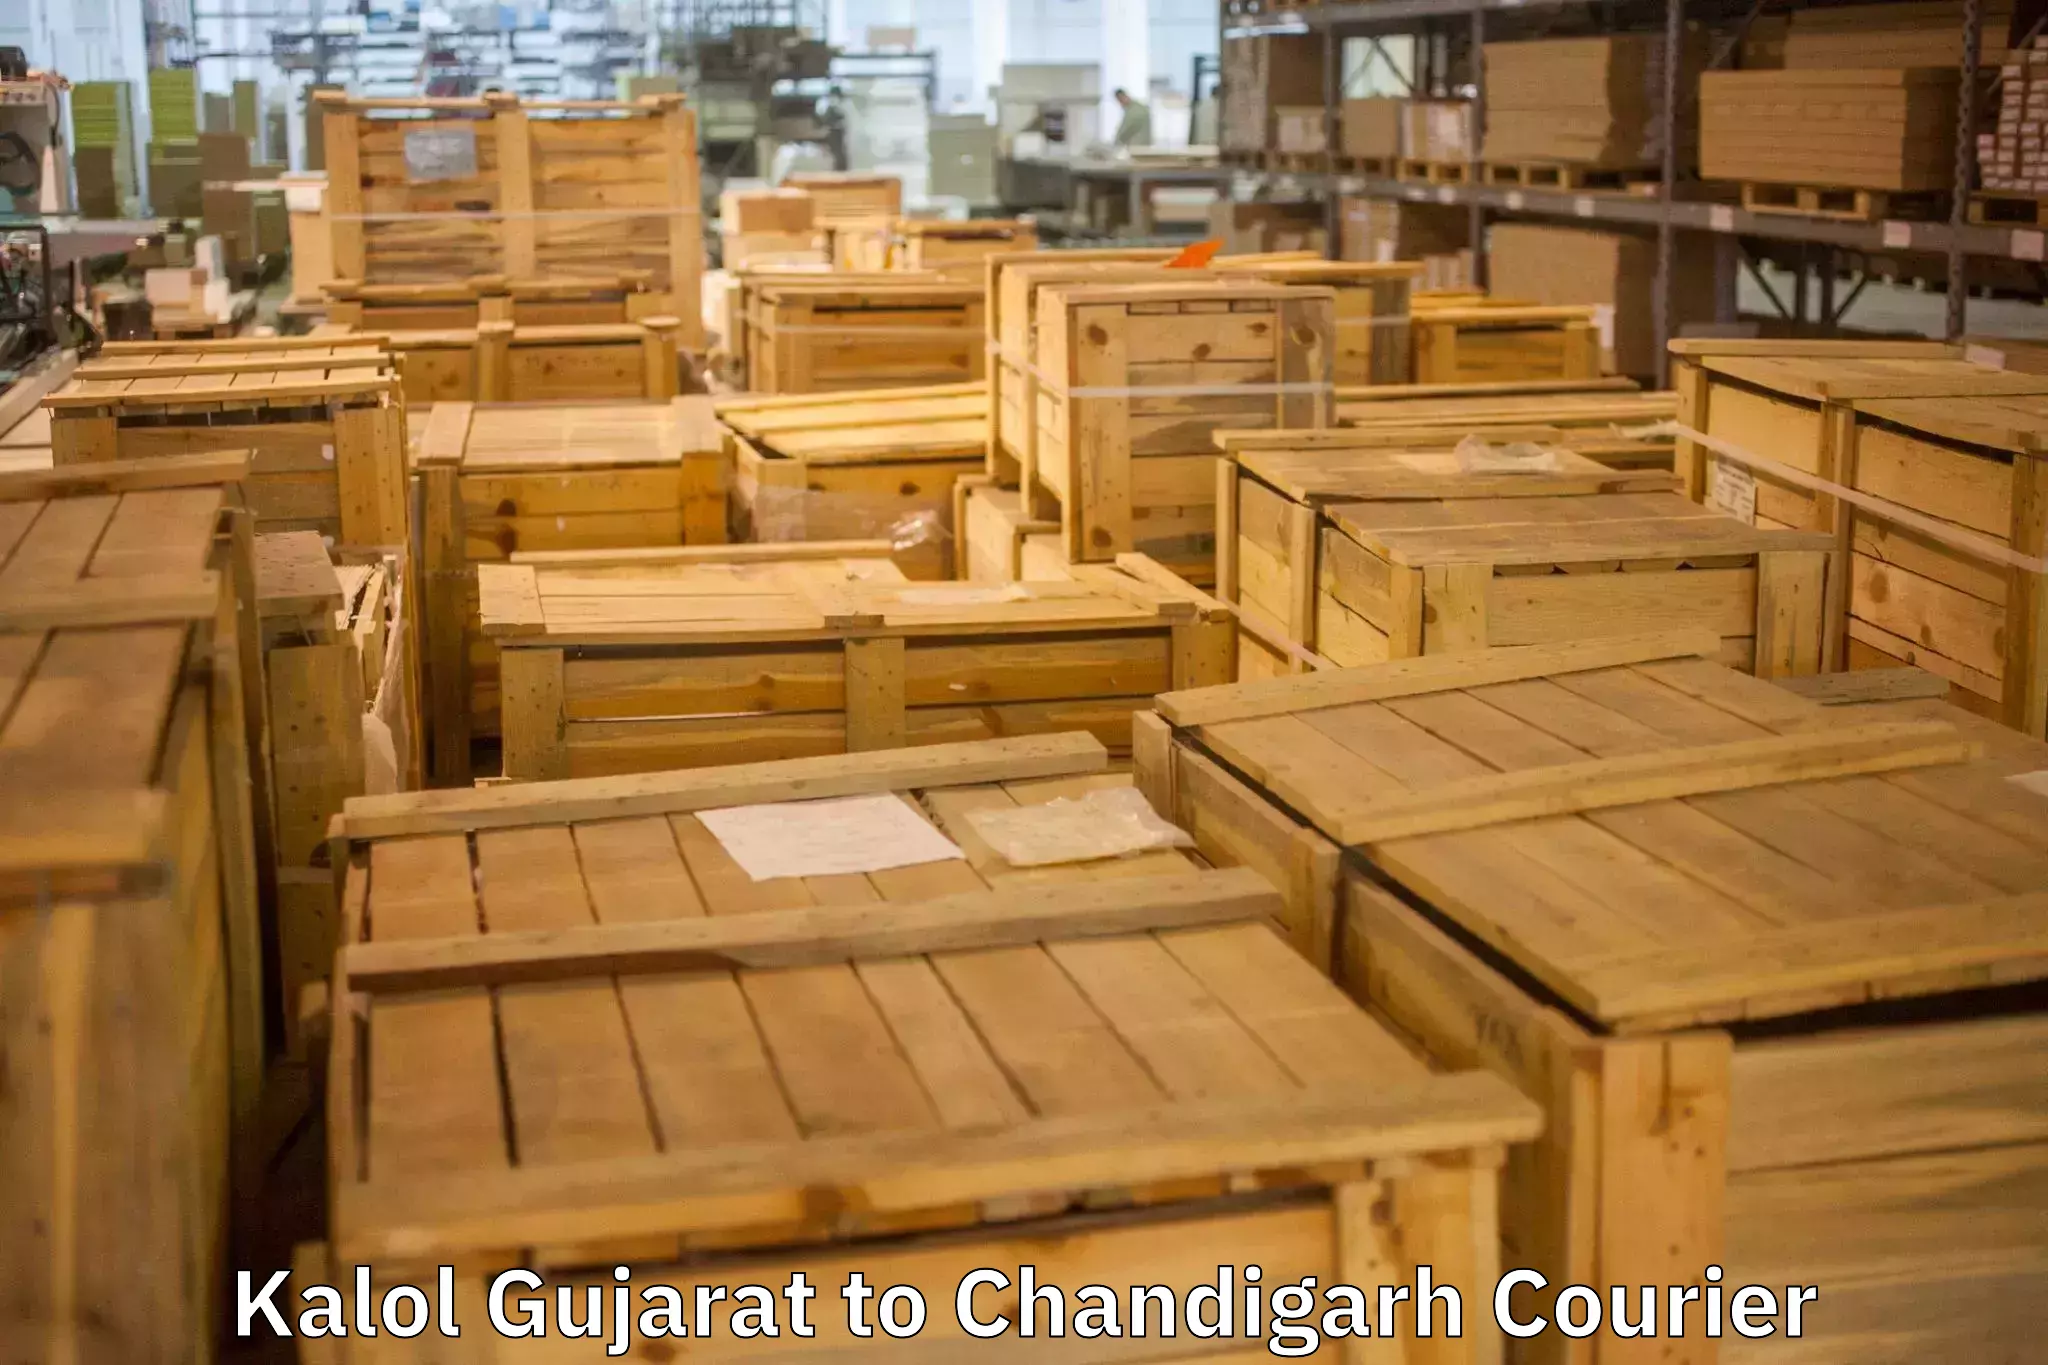 Residential moving experts Kalol Gujarat to Chandigarh